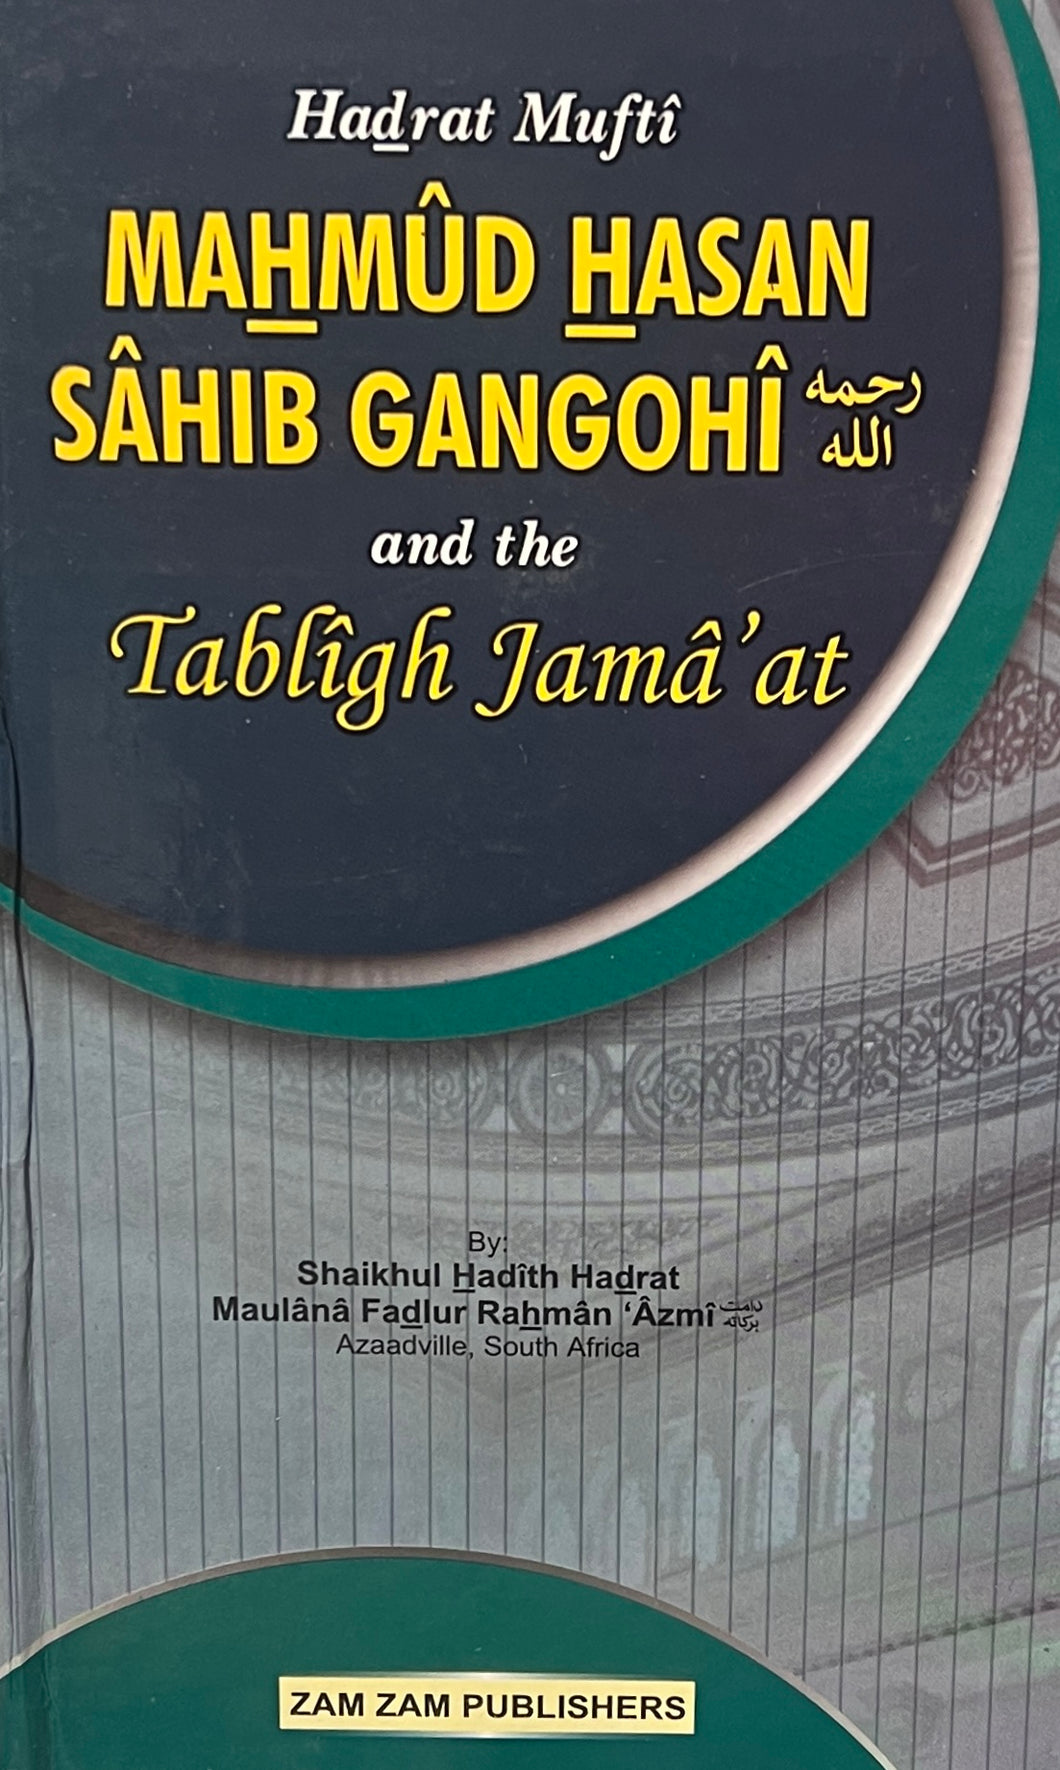 Hadrat Mufti Mahmud Hasan Gangohi and the Tabligh Jama'at